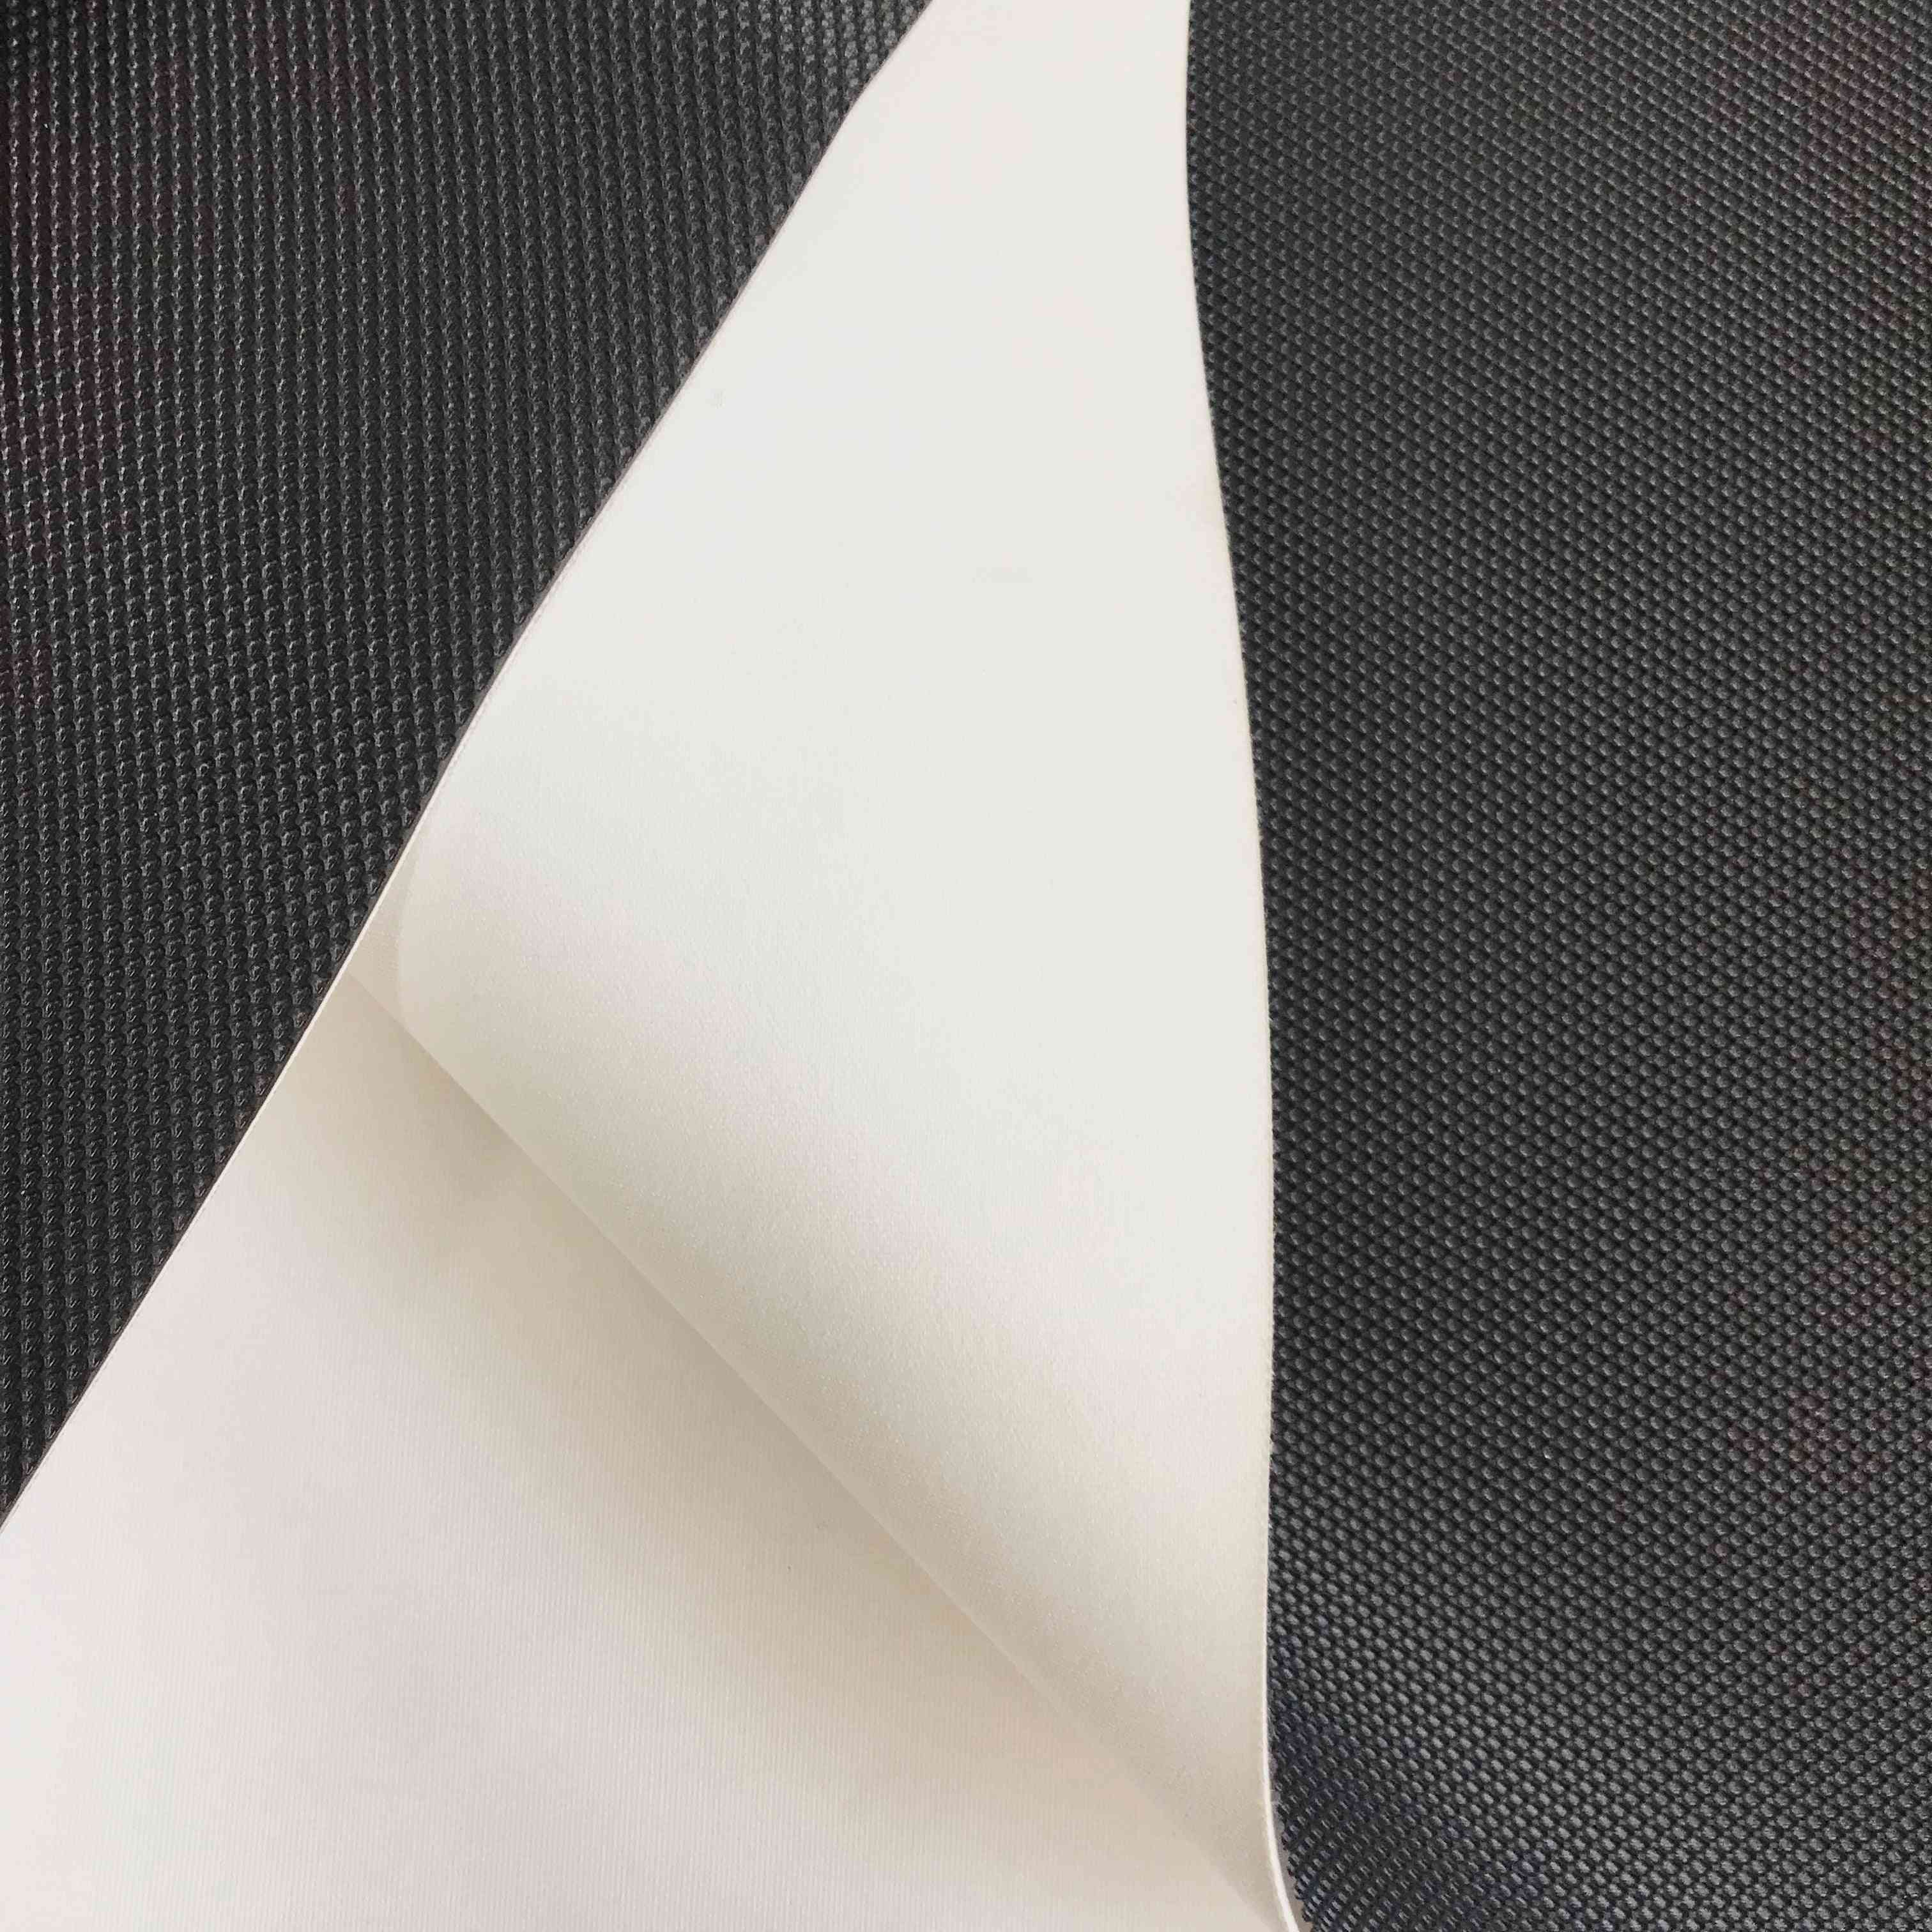 Glof Pattern, Pvc Treadmill Belt With Low Noise Fabric